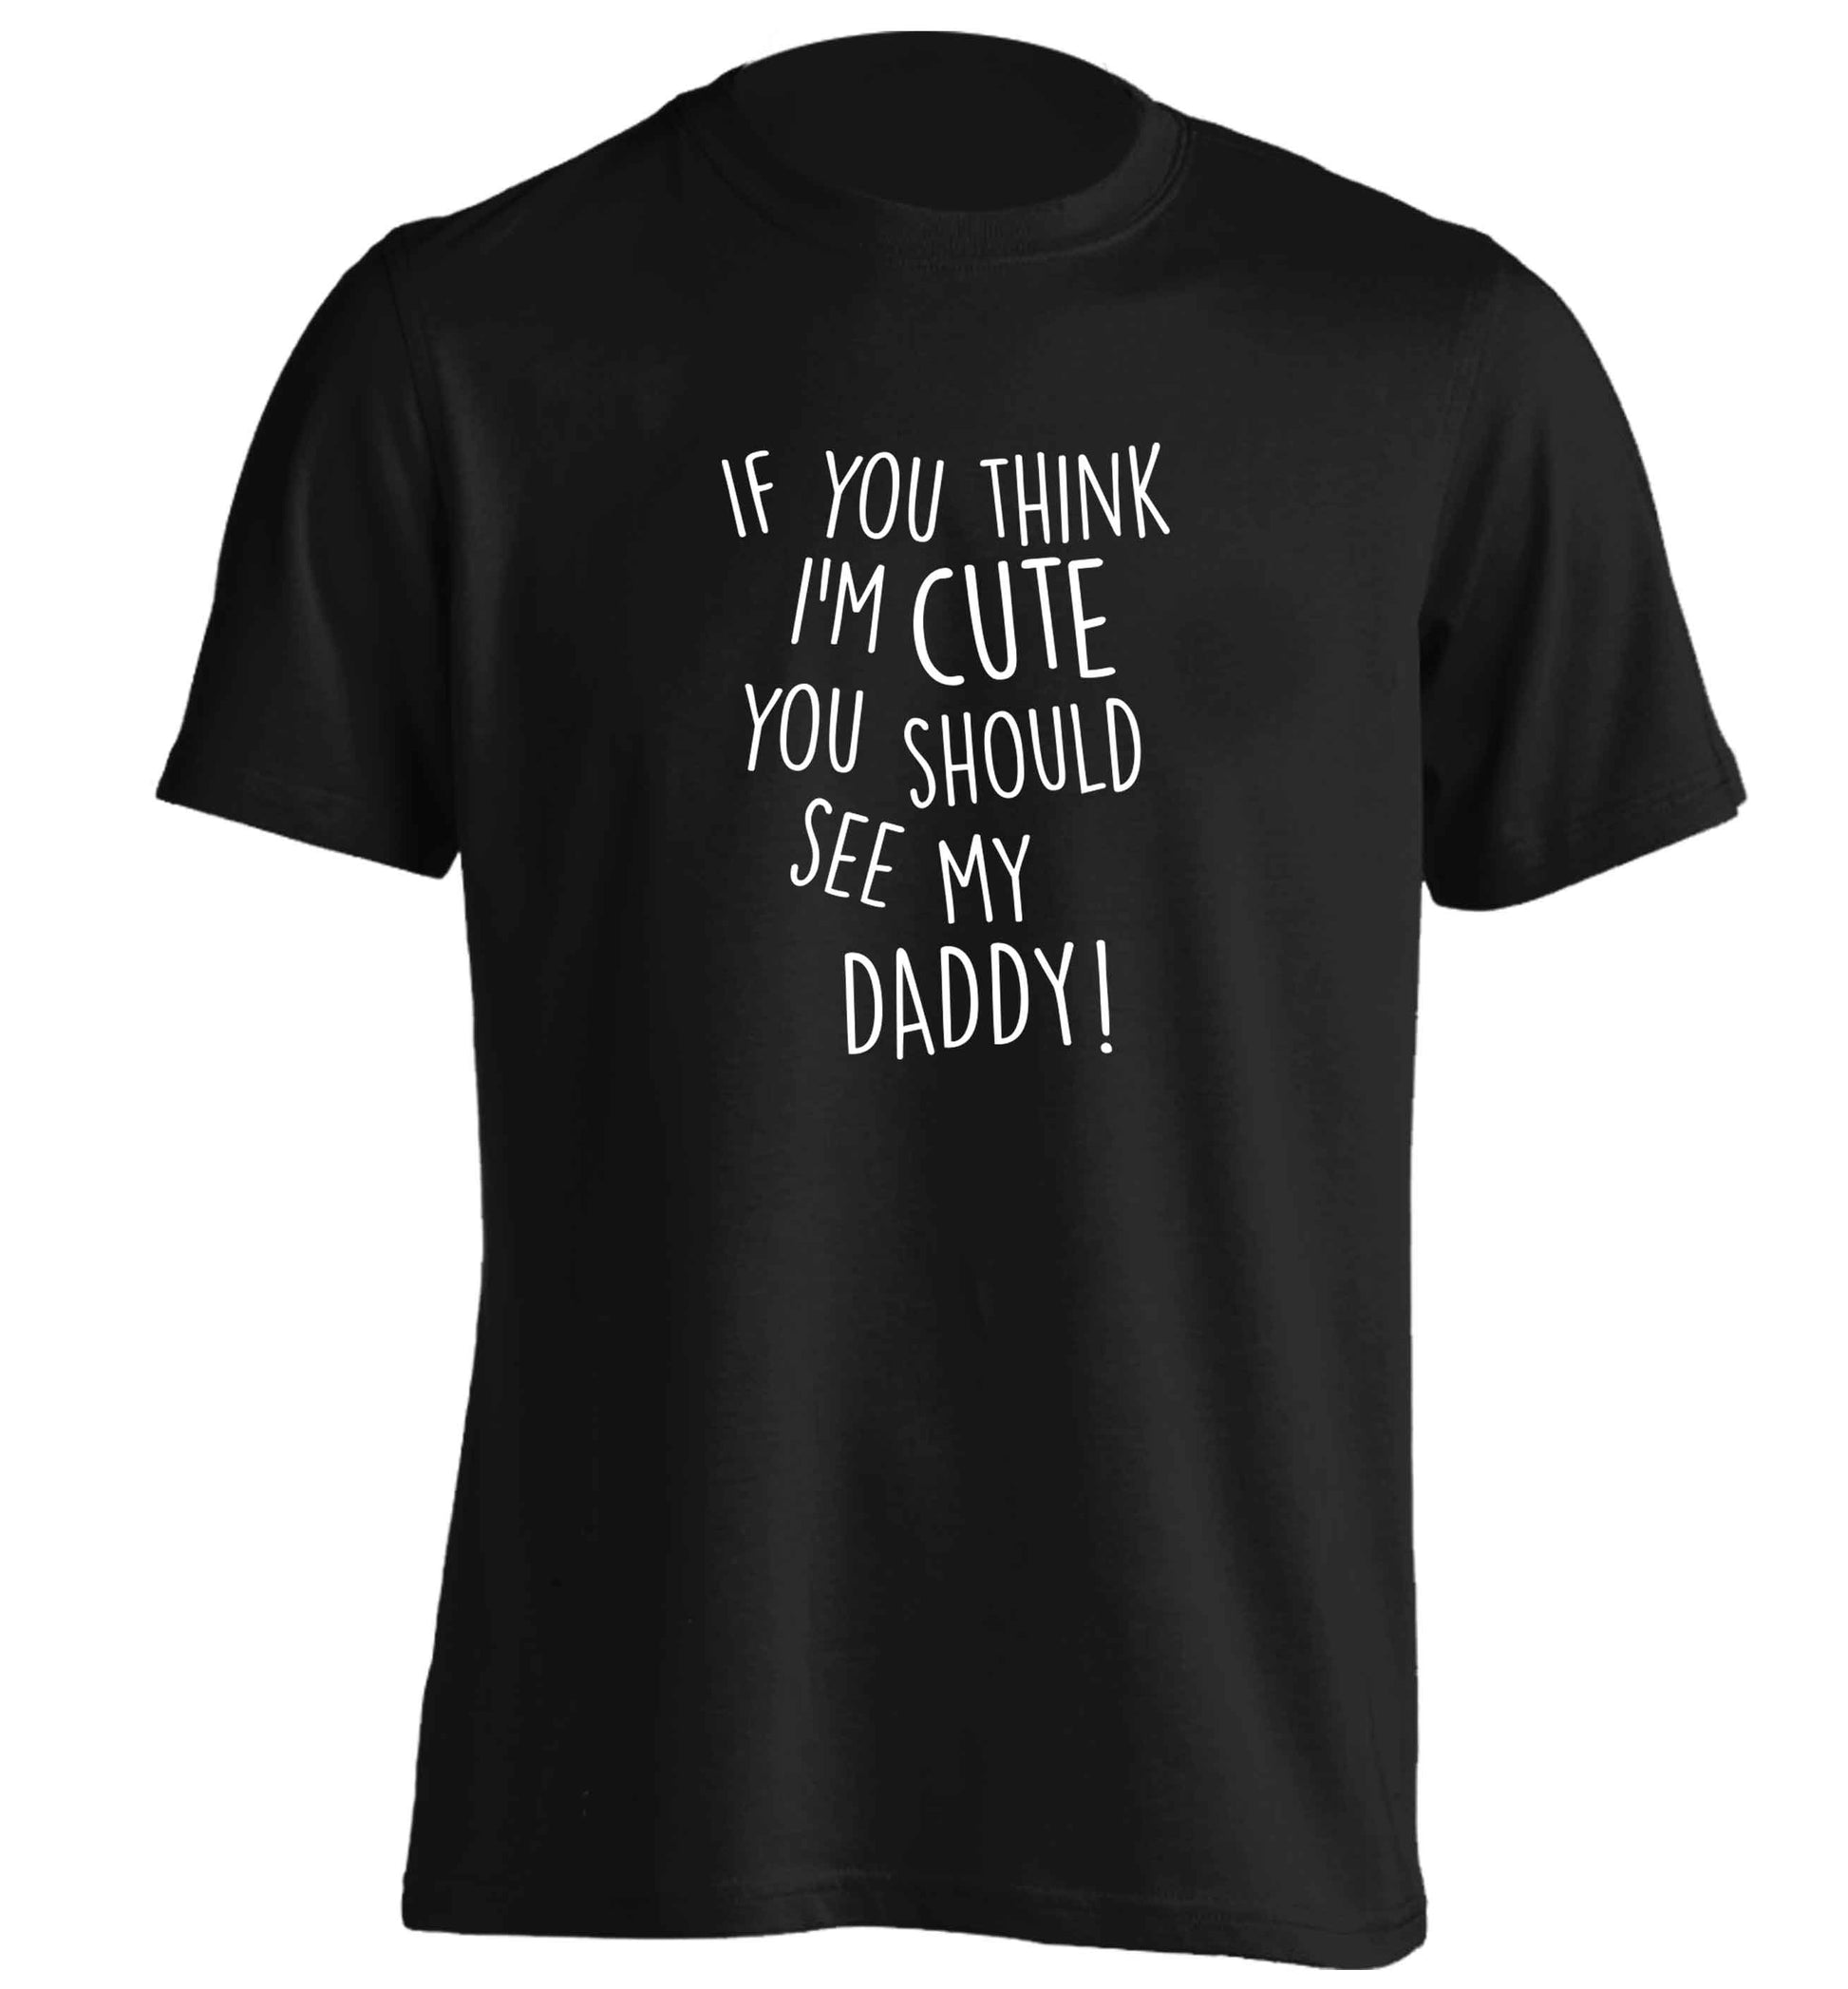 If you think I'm cute you should see my daddy adults unisex black Tshirt 2XL